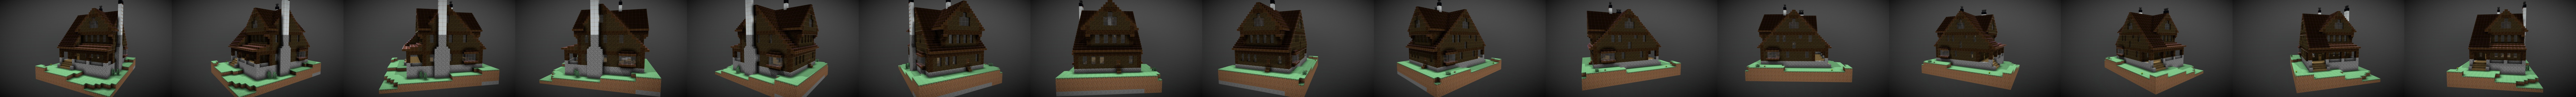 Minecraft Classic House Minecraft Map